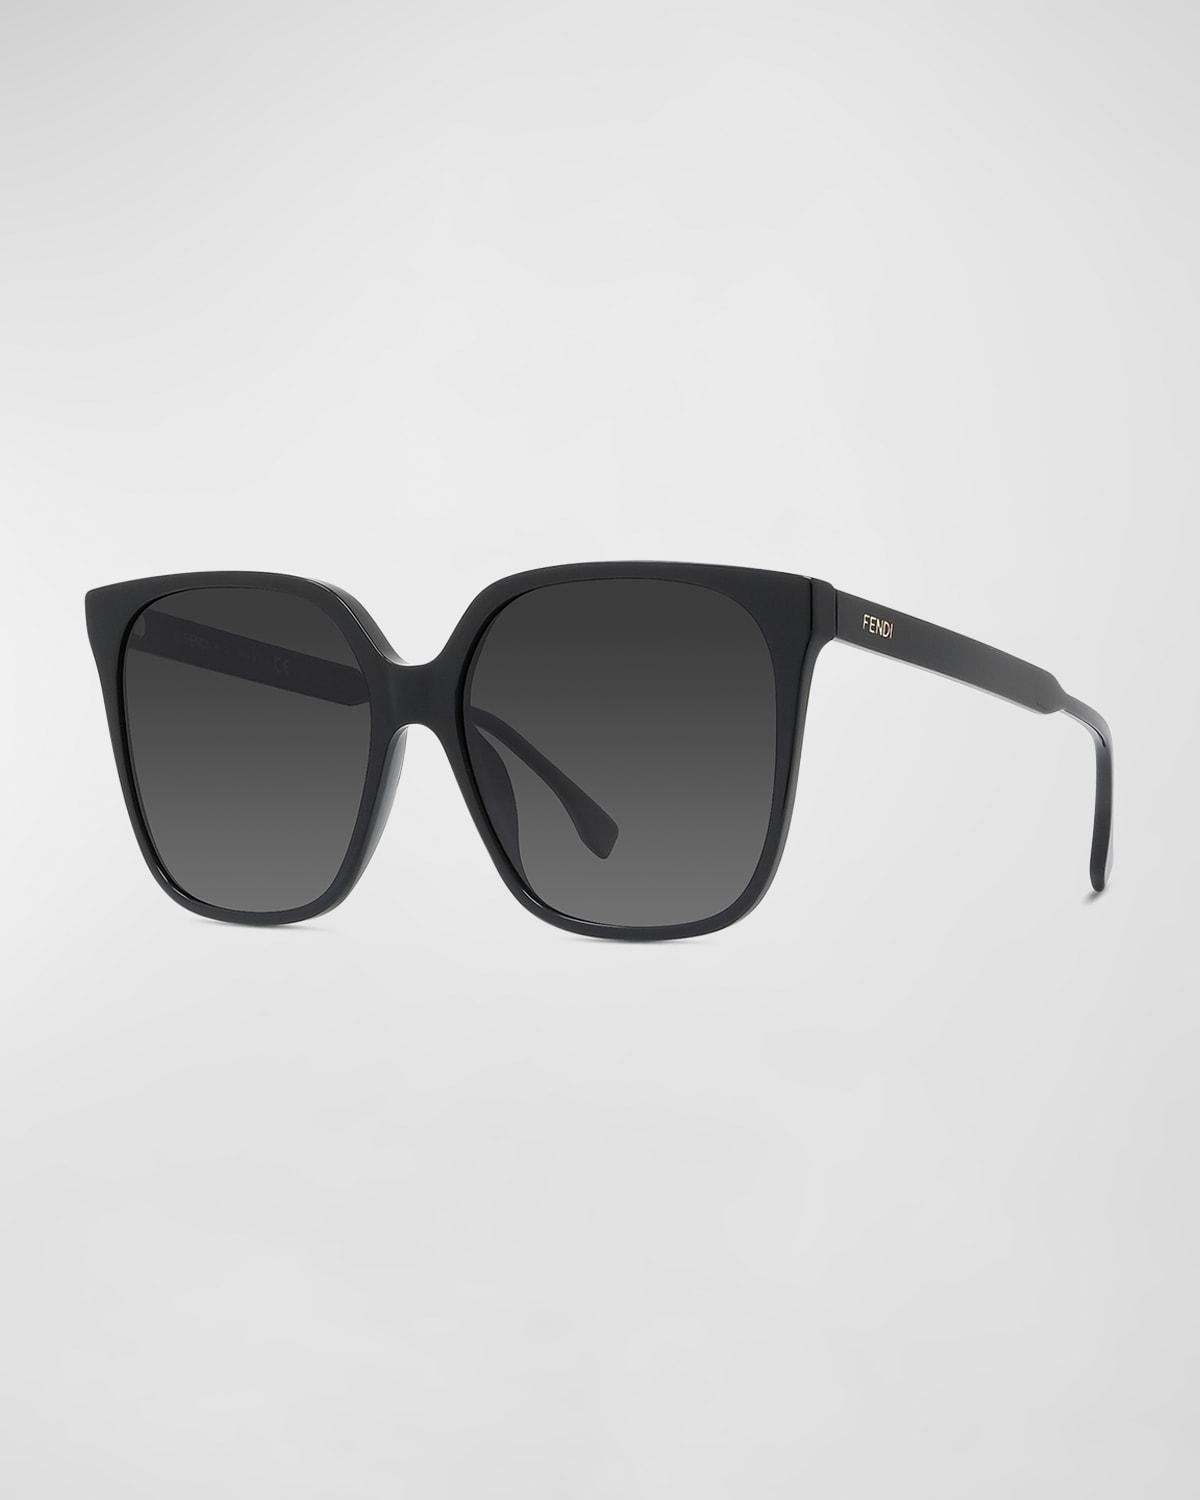 The Fendi Fine 59mm Geometric Sunglasses Product Image